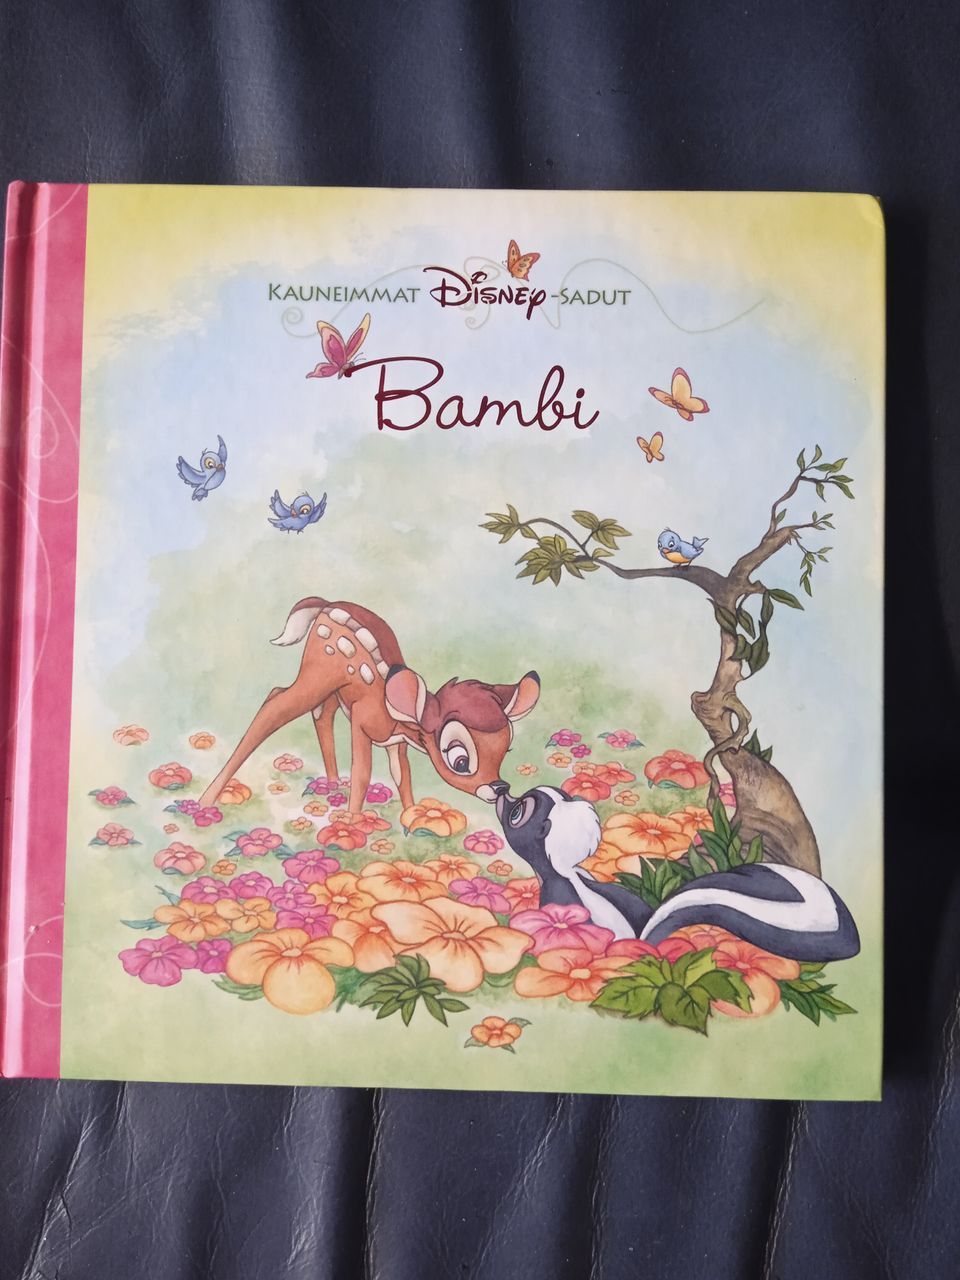 Uusi kauneimmat Disney sadut Bambi